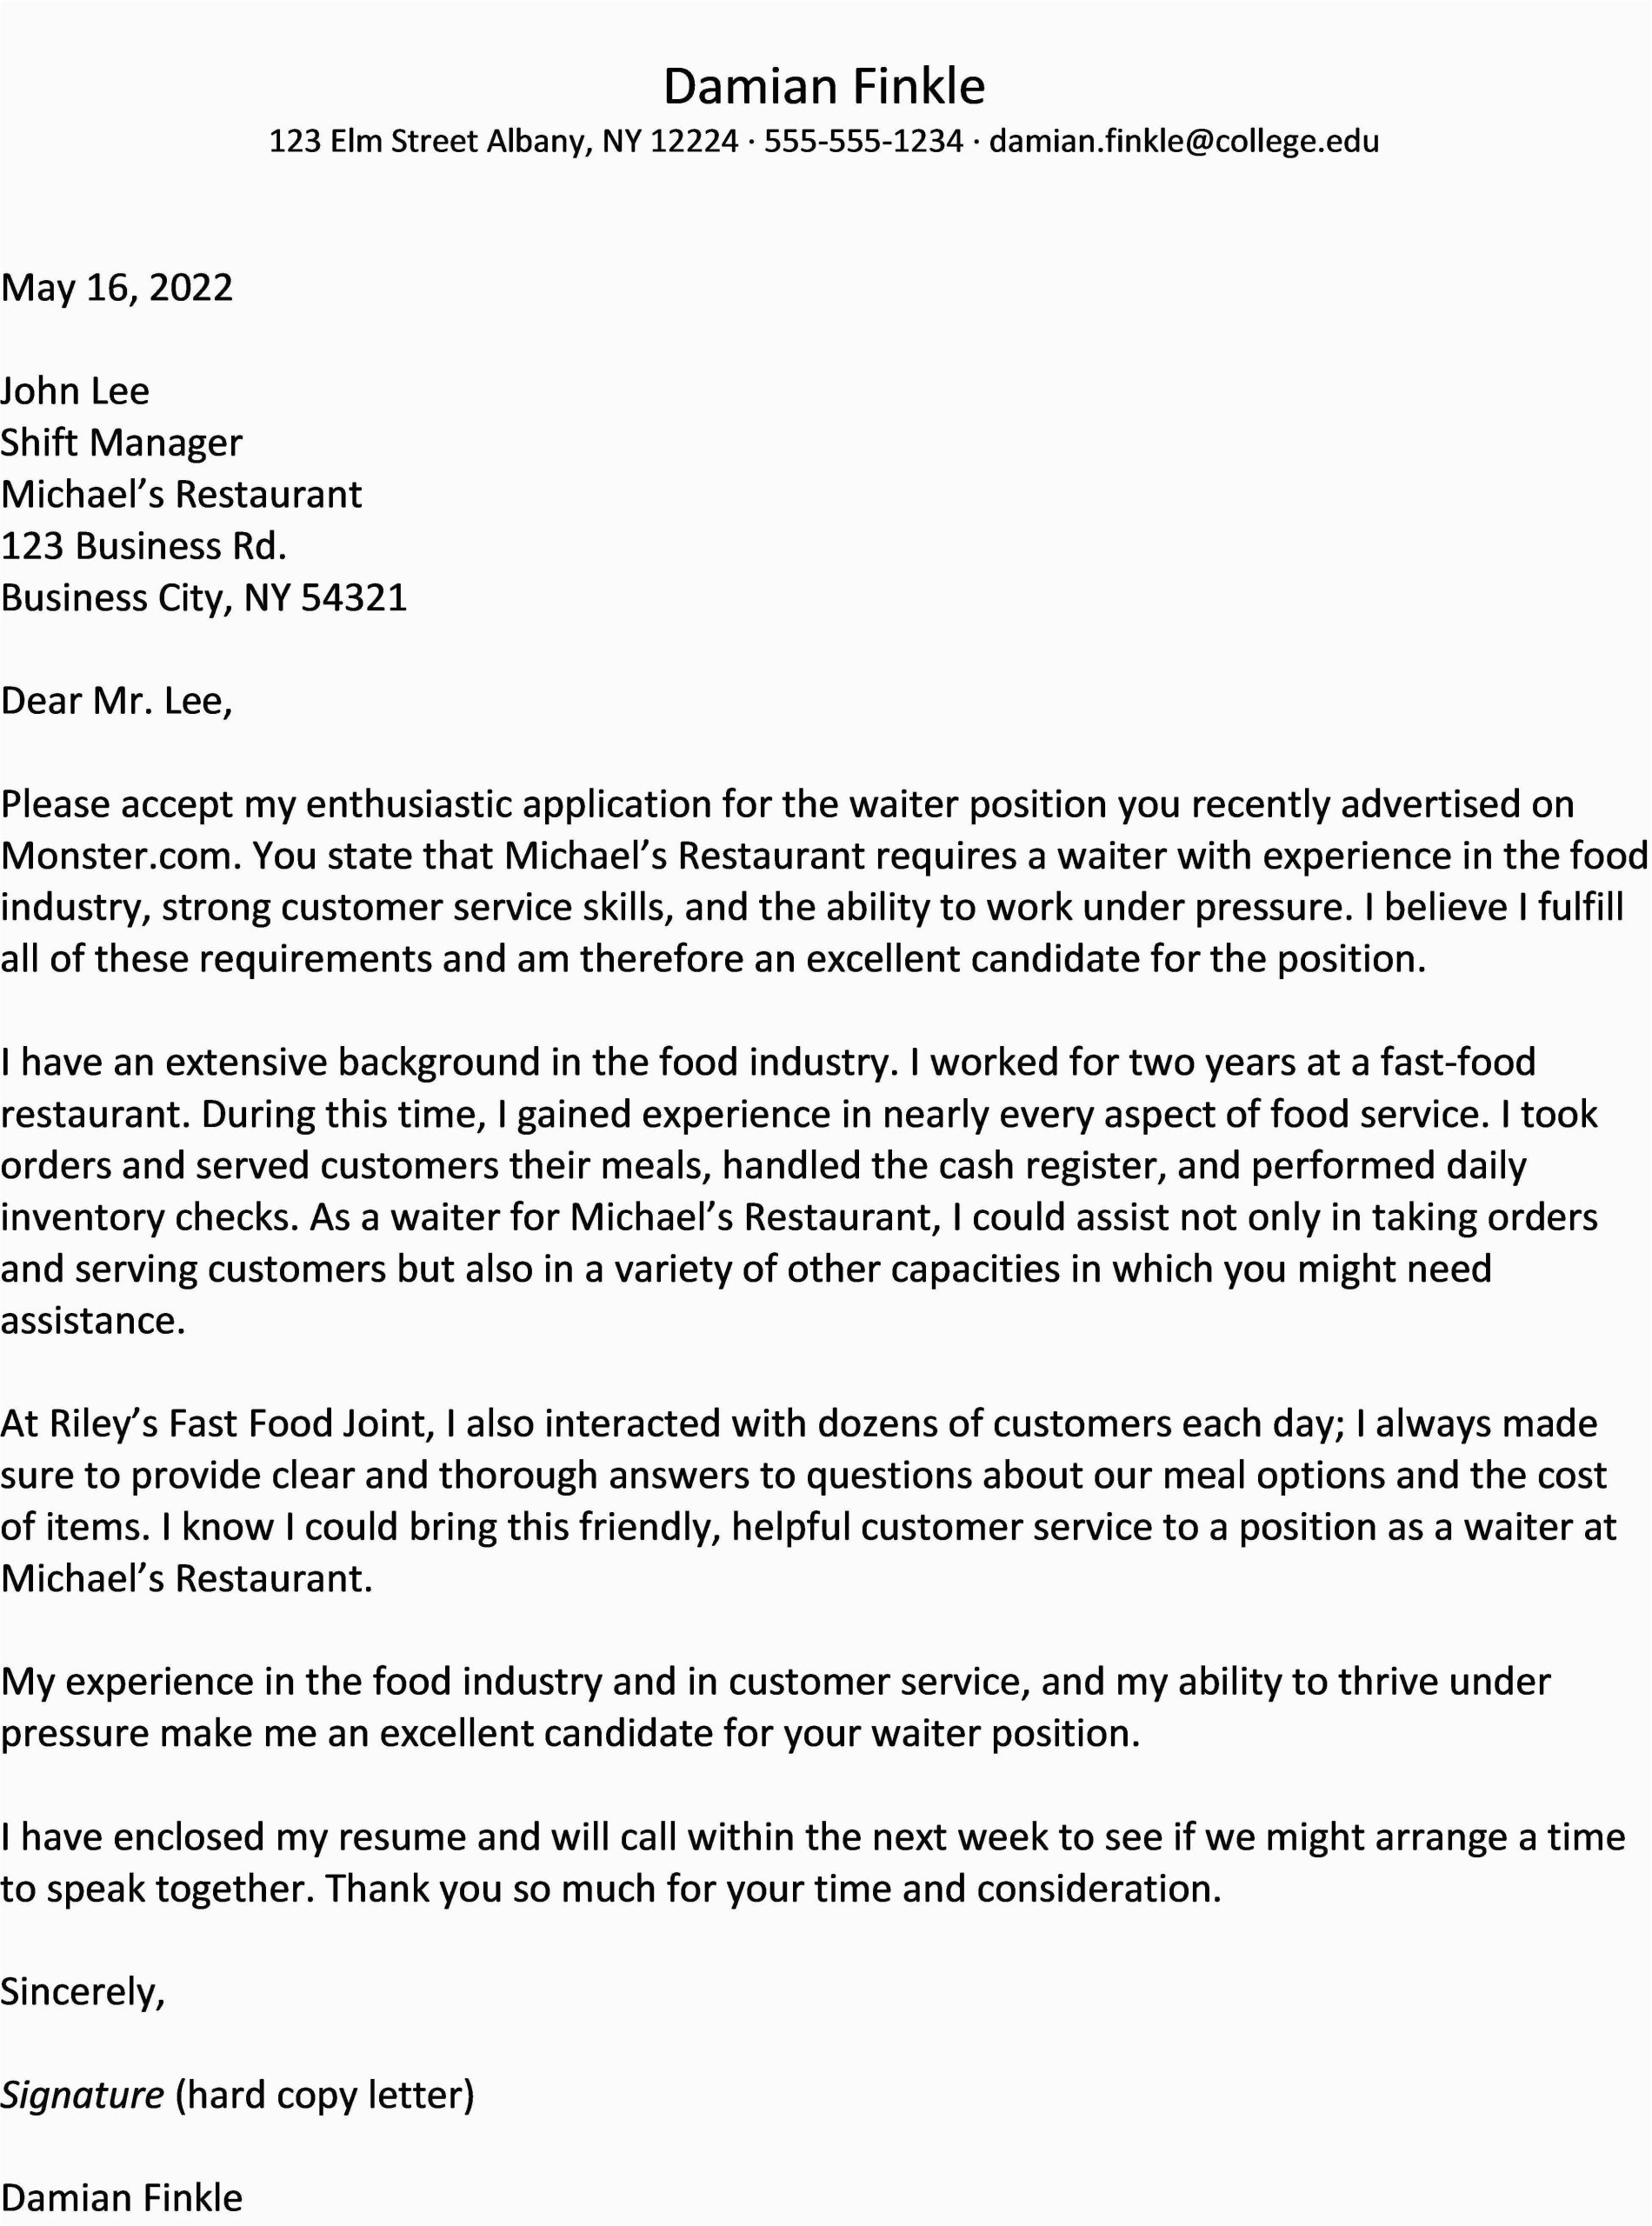 Sample Of Cover Letter for Resume 2023 Waiter Waitress Resume and Cover Letter Examples